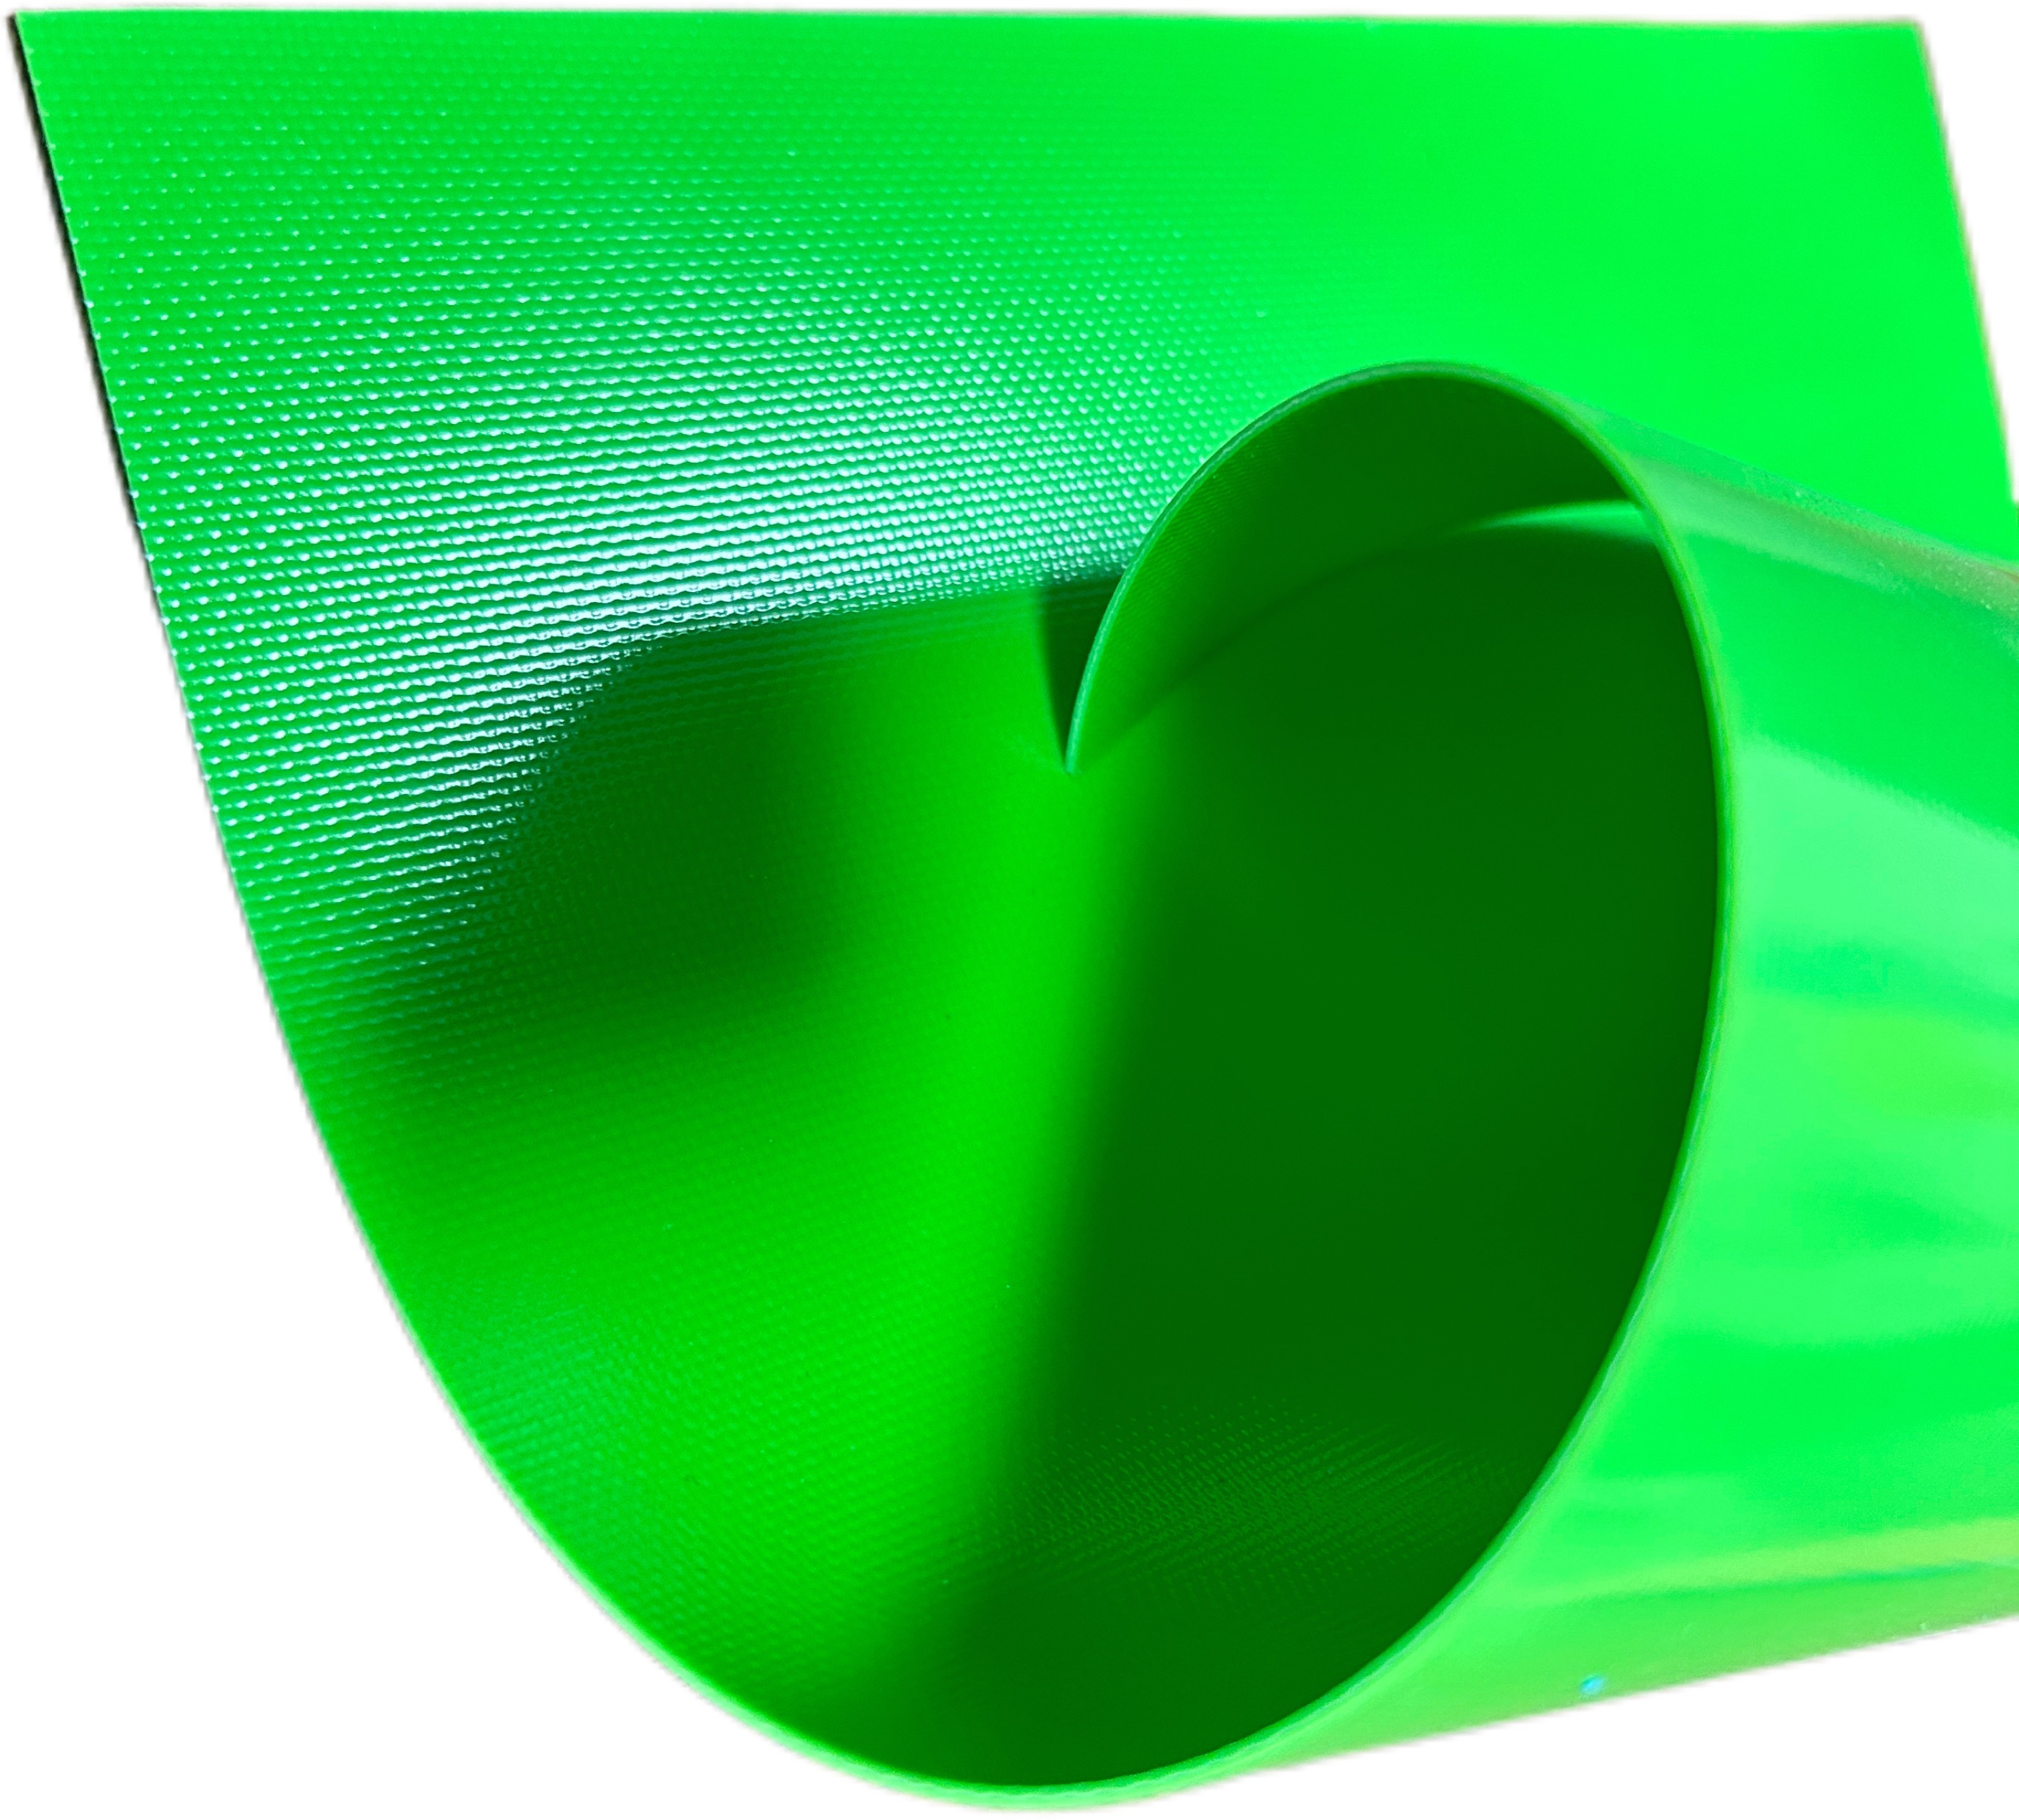 Livite 760gsm 0,6 mm in tessuto PVC Materiale gonfiabile